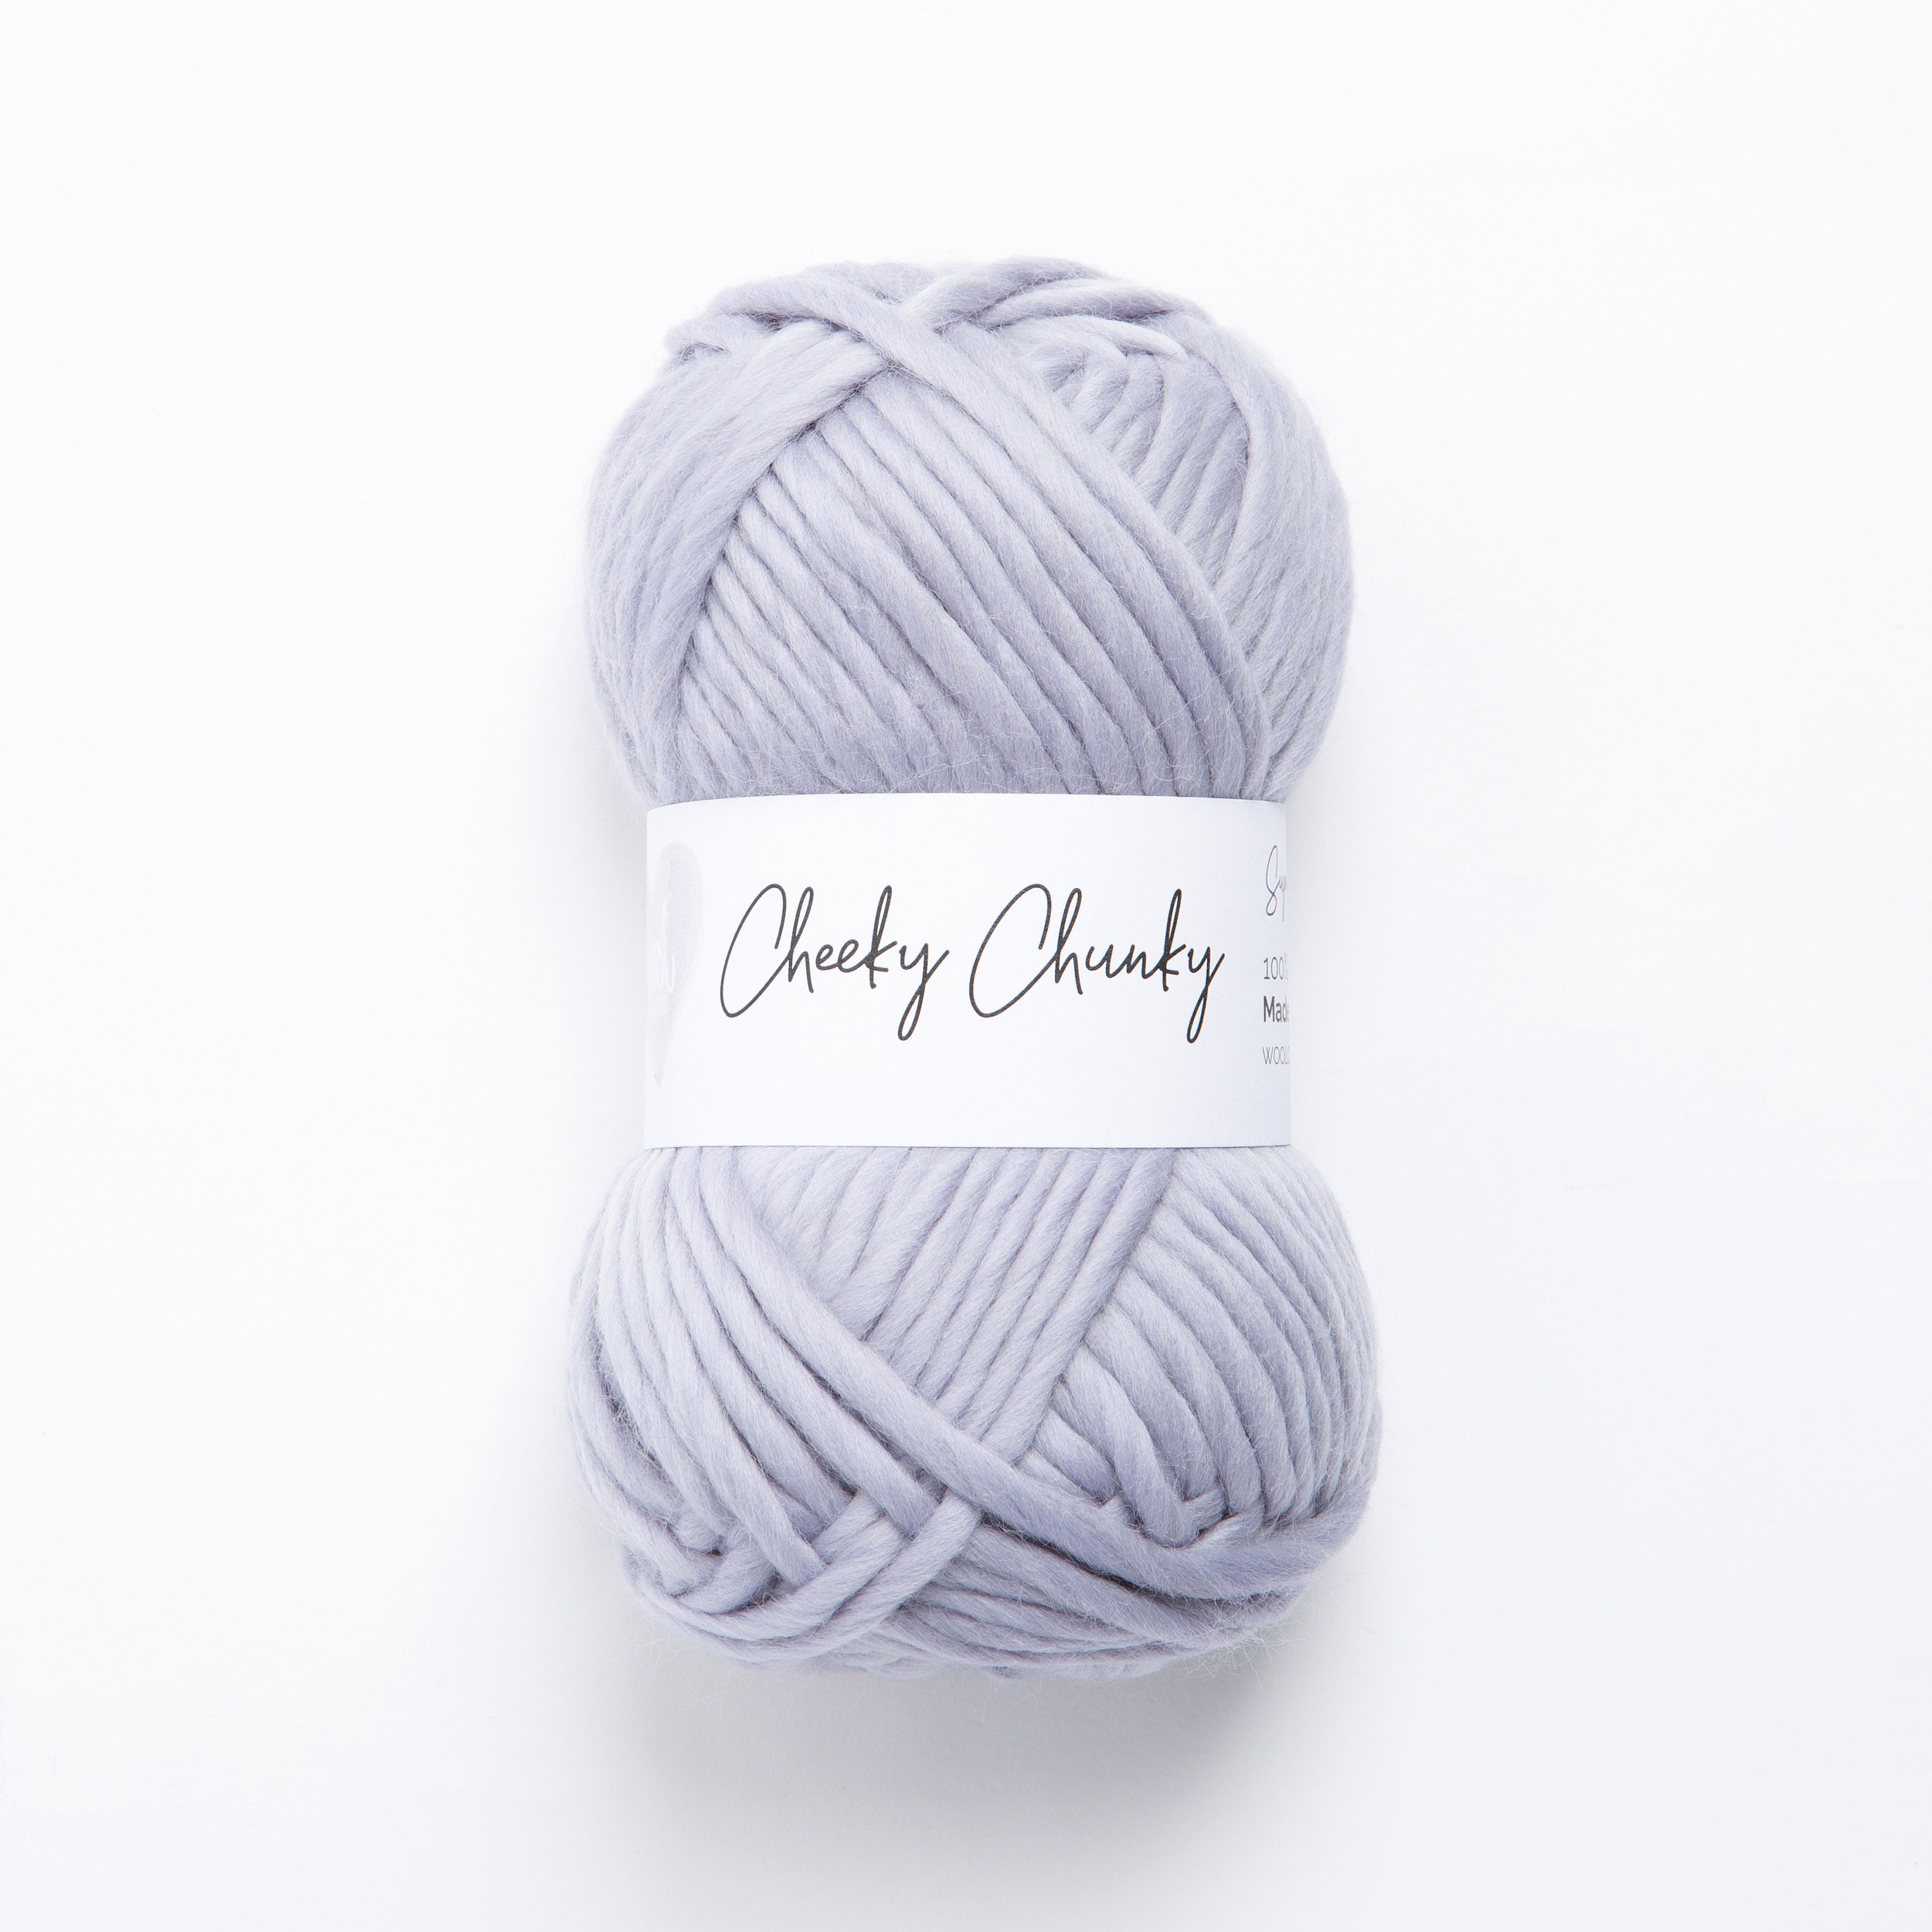 Olive Super Chunky Yarn. Cheeky Chunky Yarn by Wool Couture. 100g